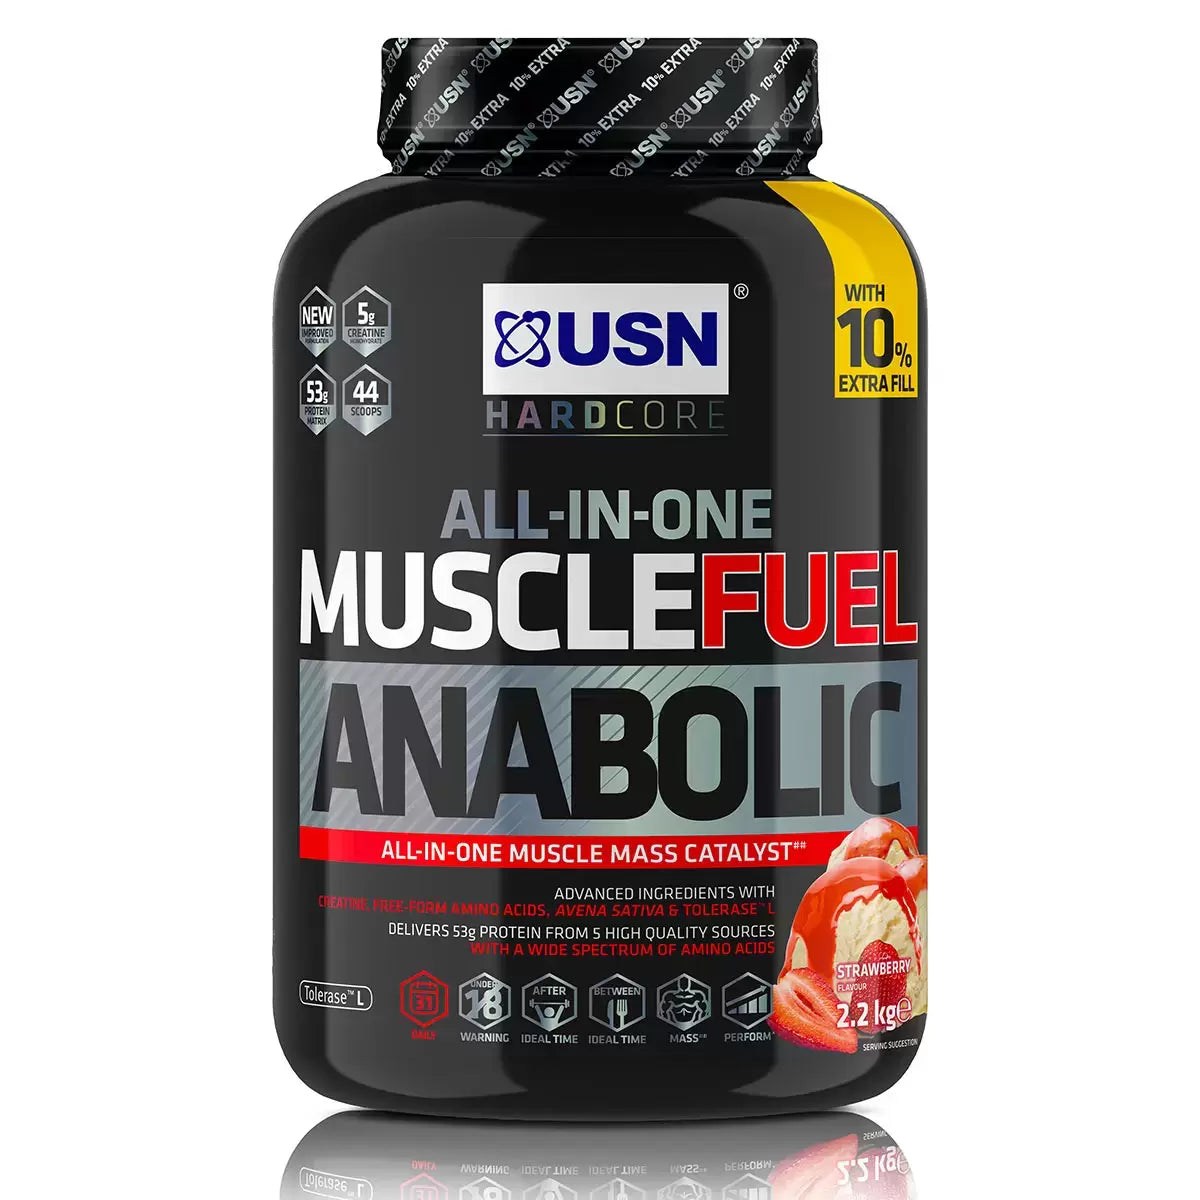 USN Muscle Fuel Strawberry Anabolic Powder - 2.2kg